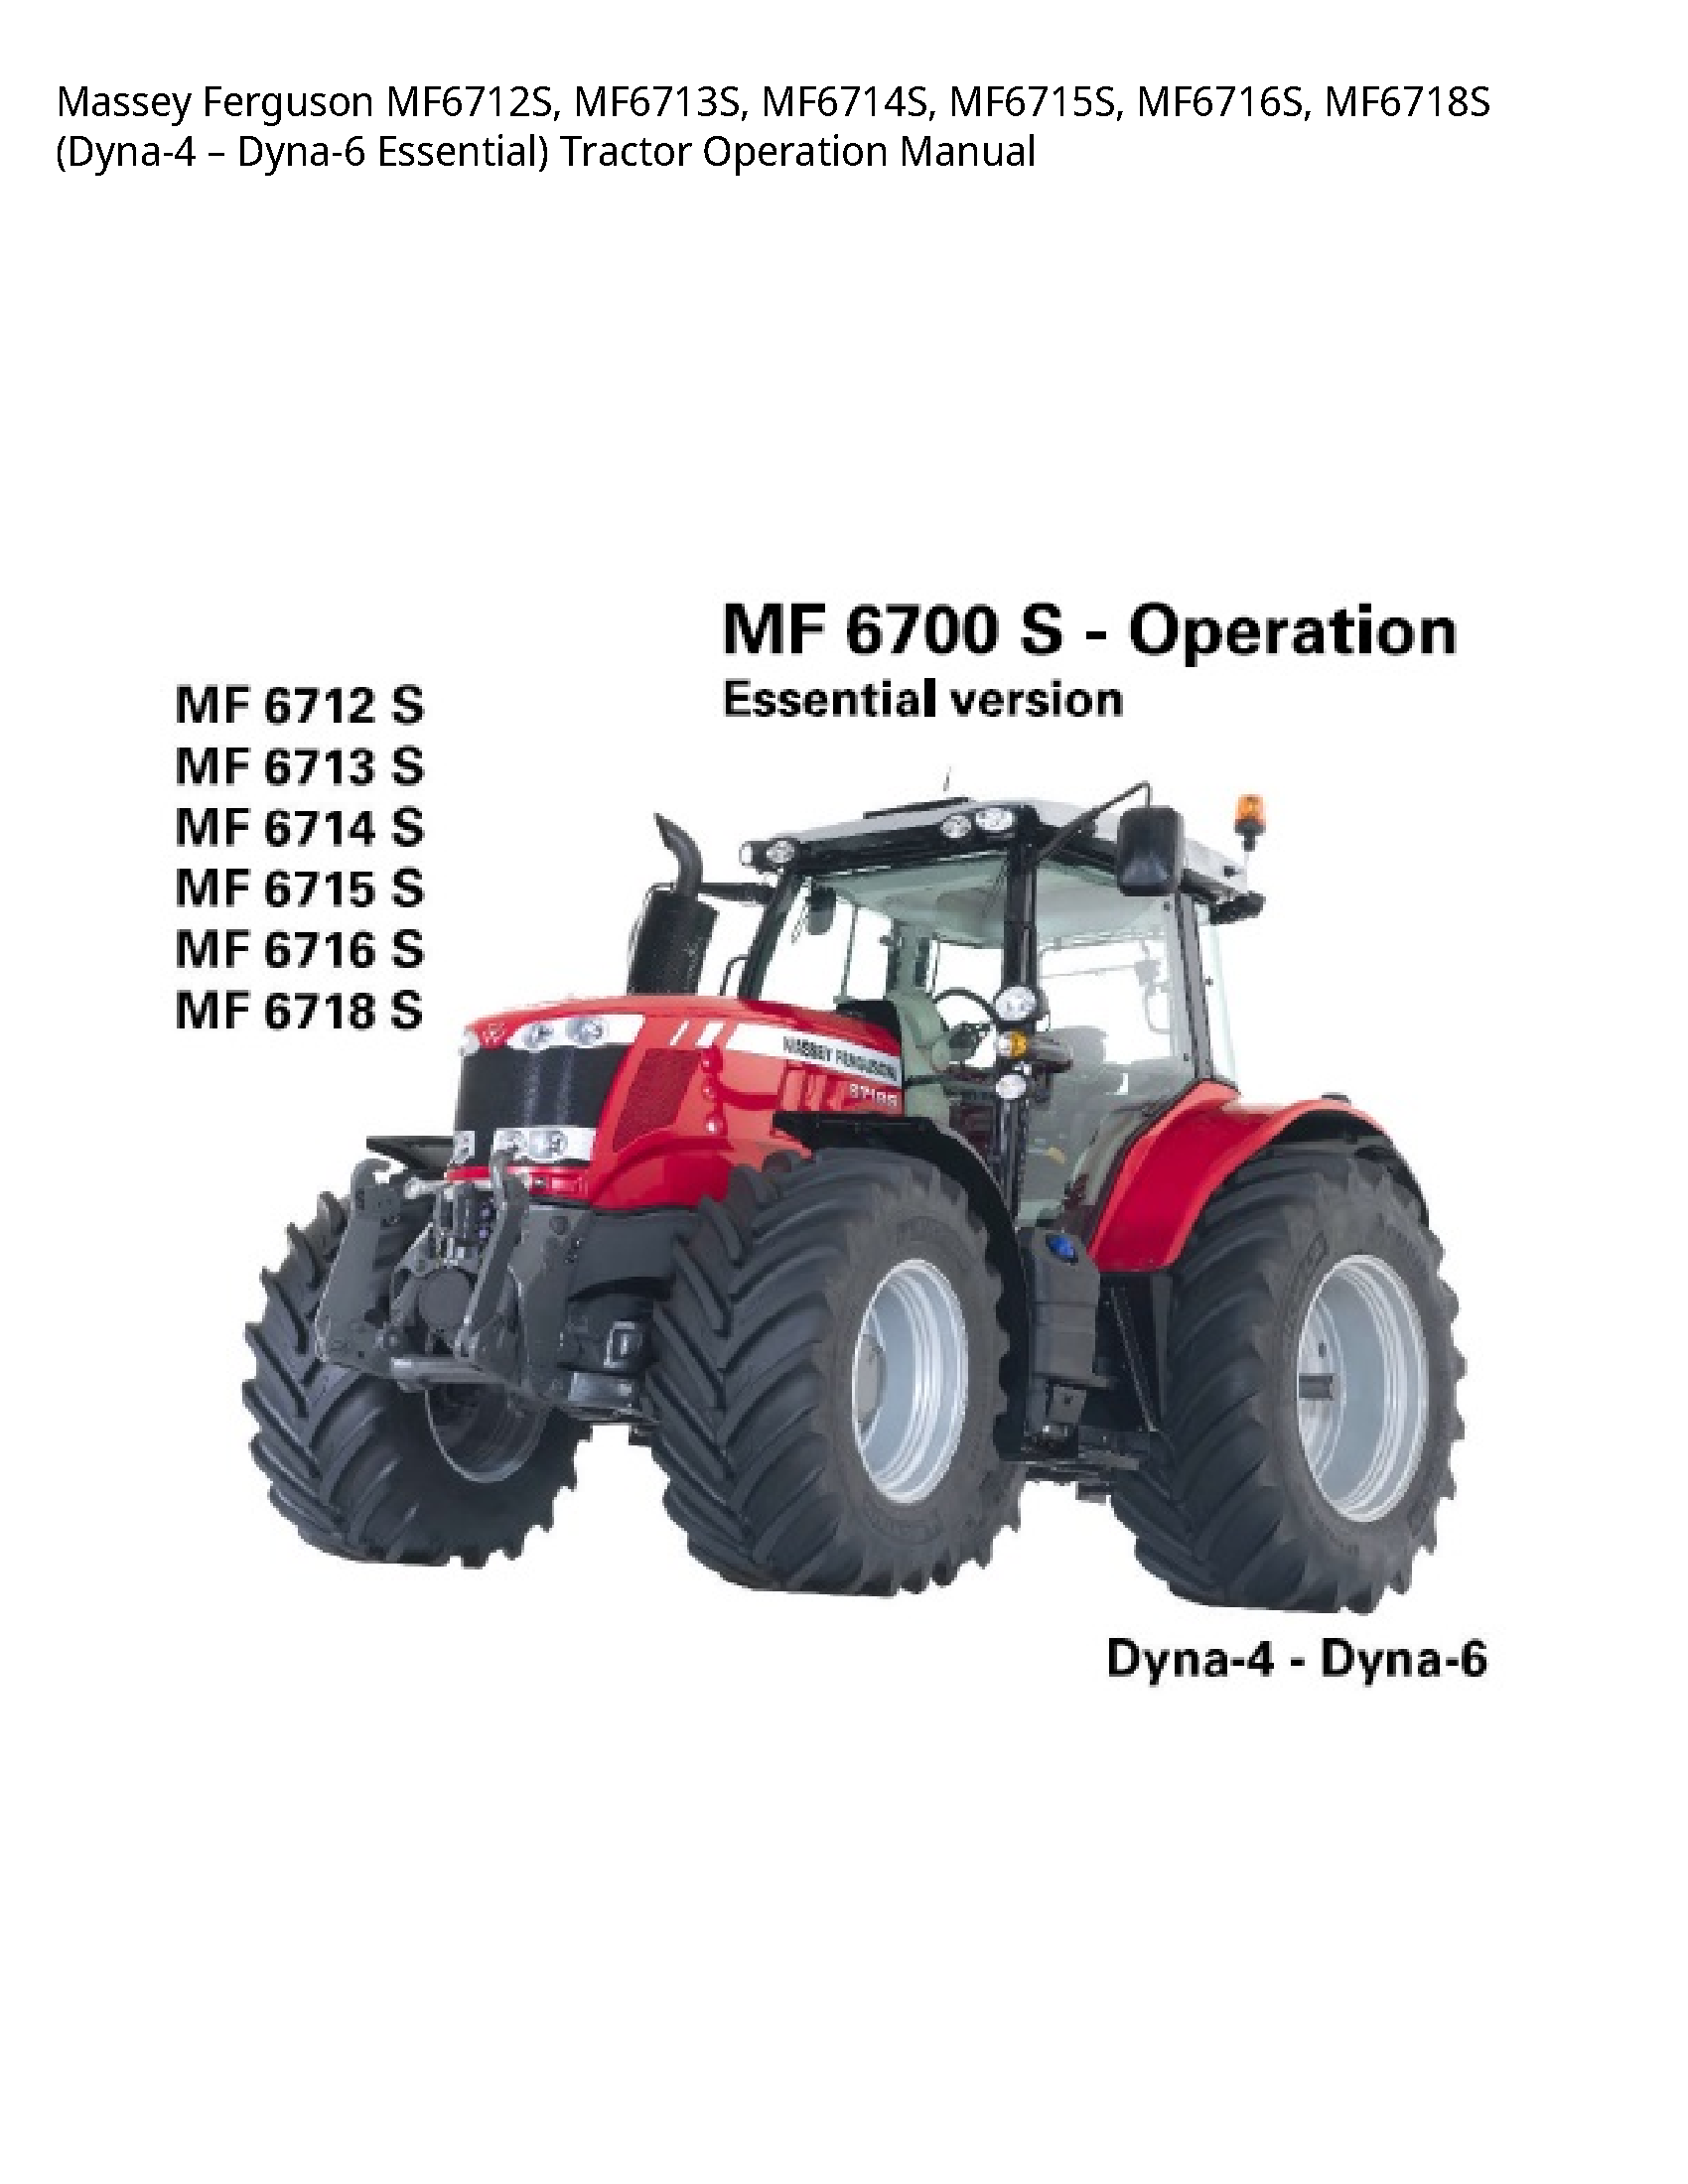 Massey Ferguson MF6712S Essential) Tractor Operation manual